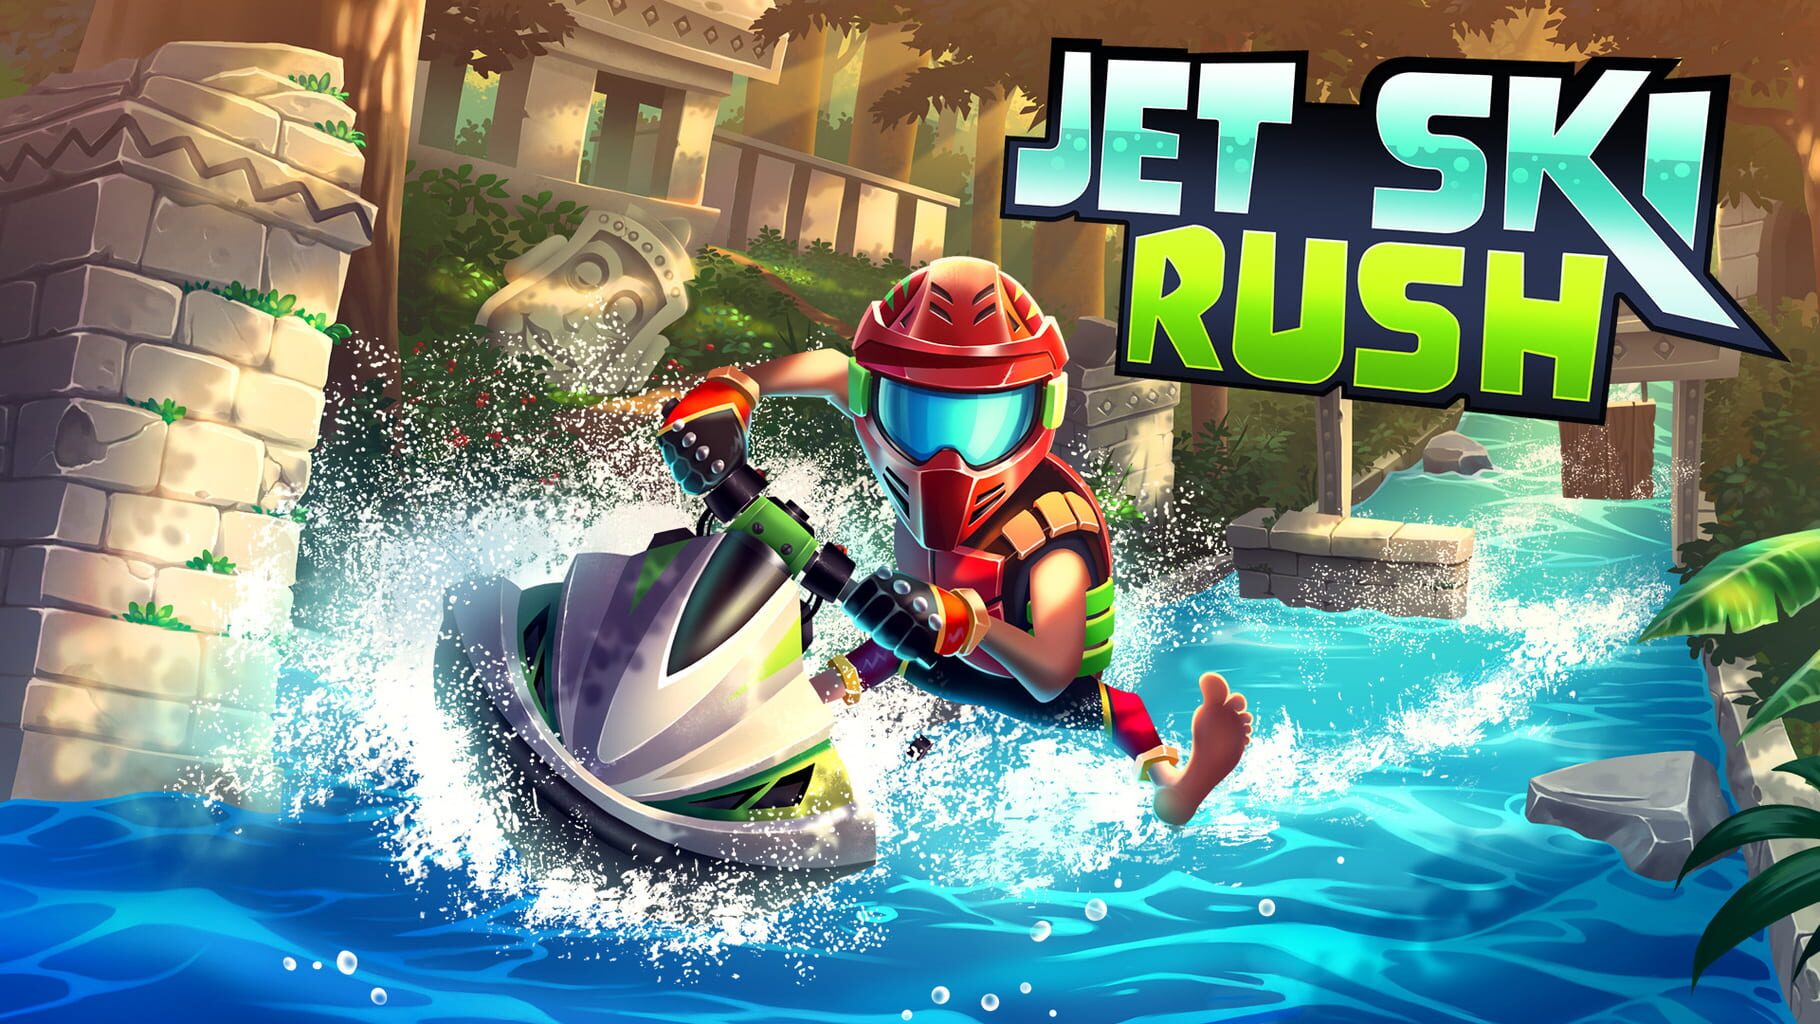 Jet Ski Rush artwork